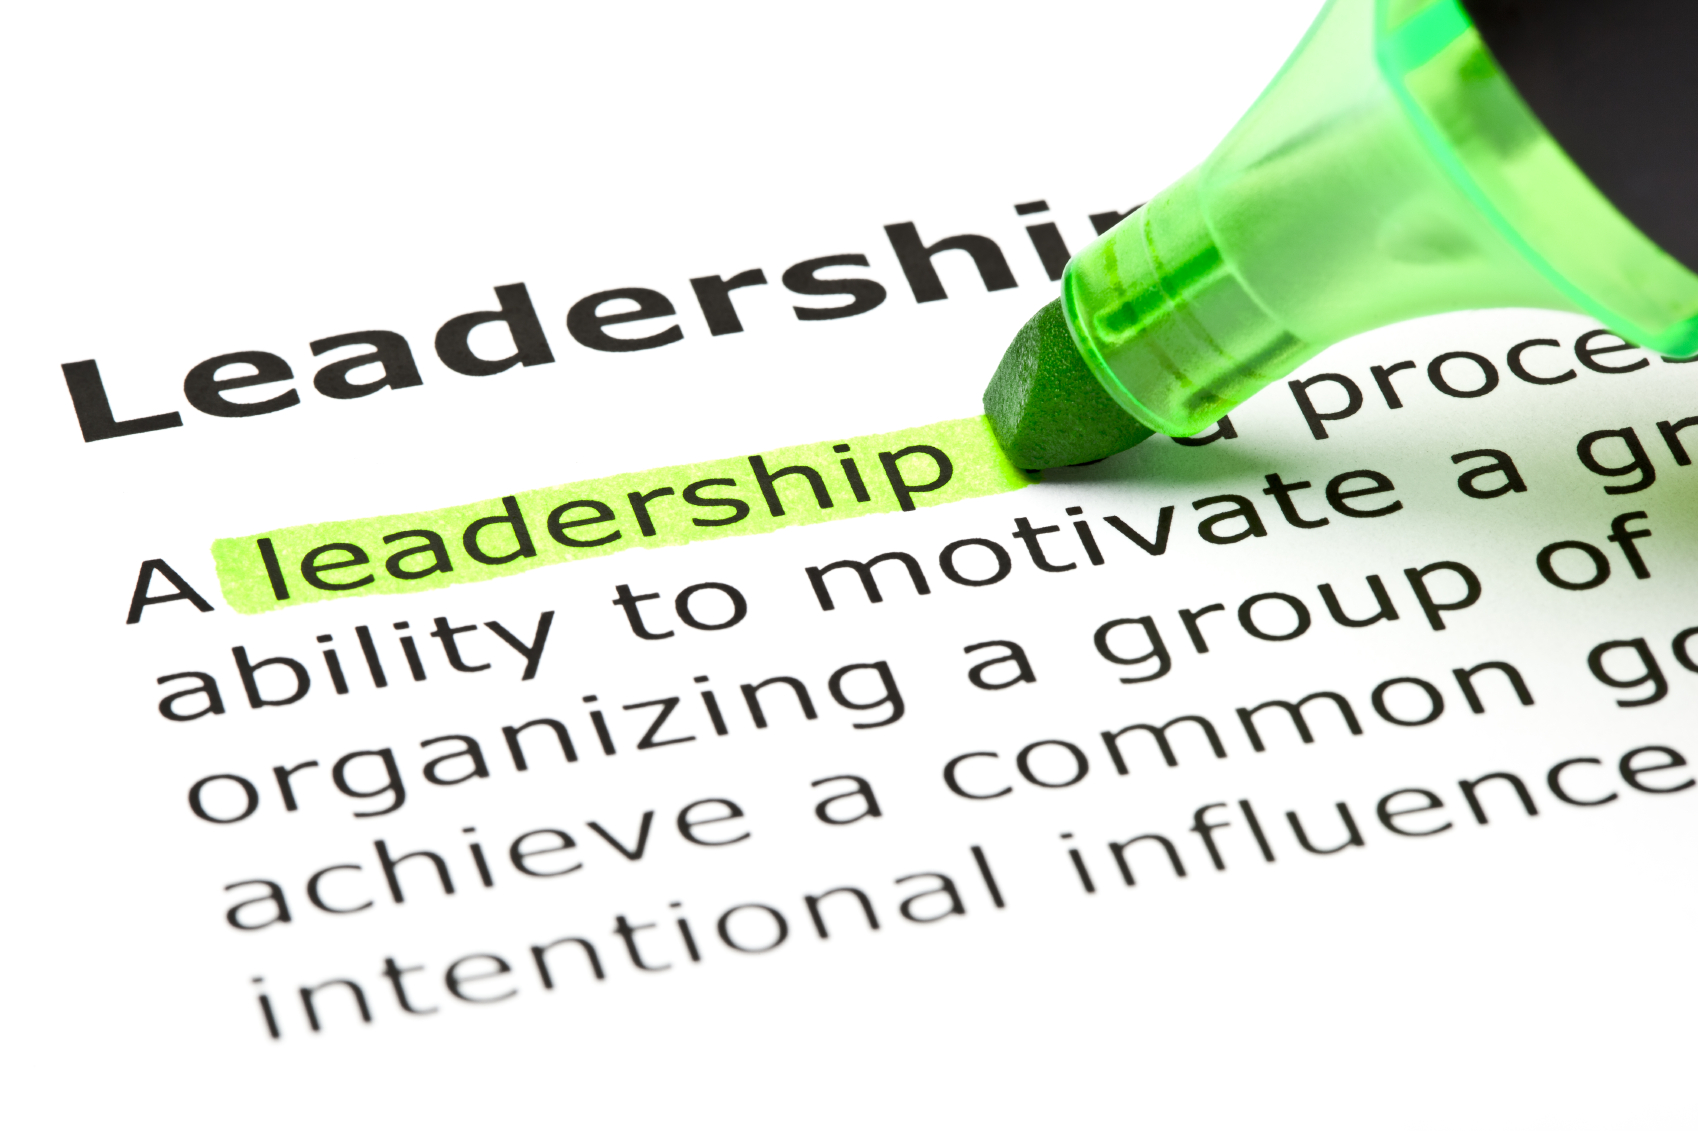 http://thestrategyguysite.com/wp-content/uploads/2013/06/Leadership-image-blog-posts.jpg